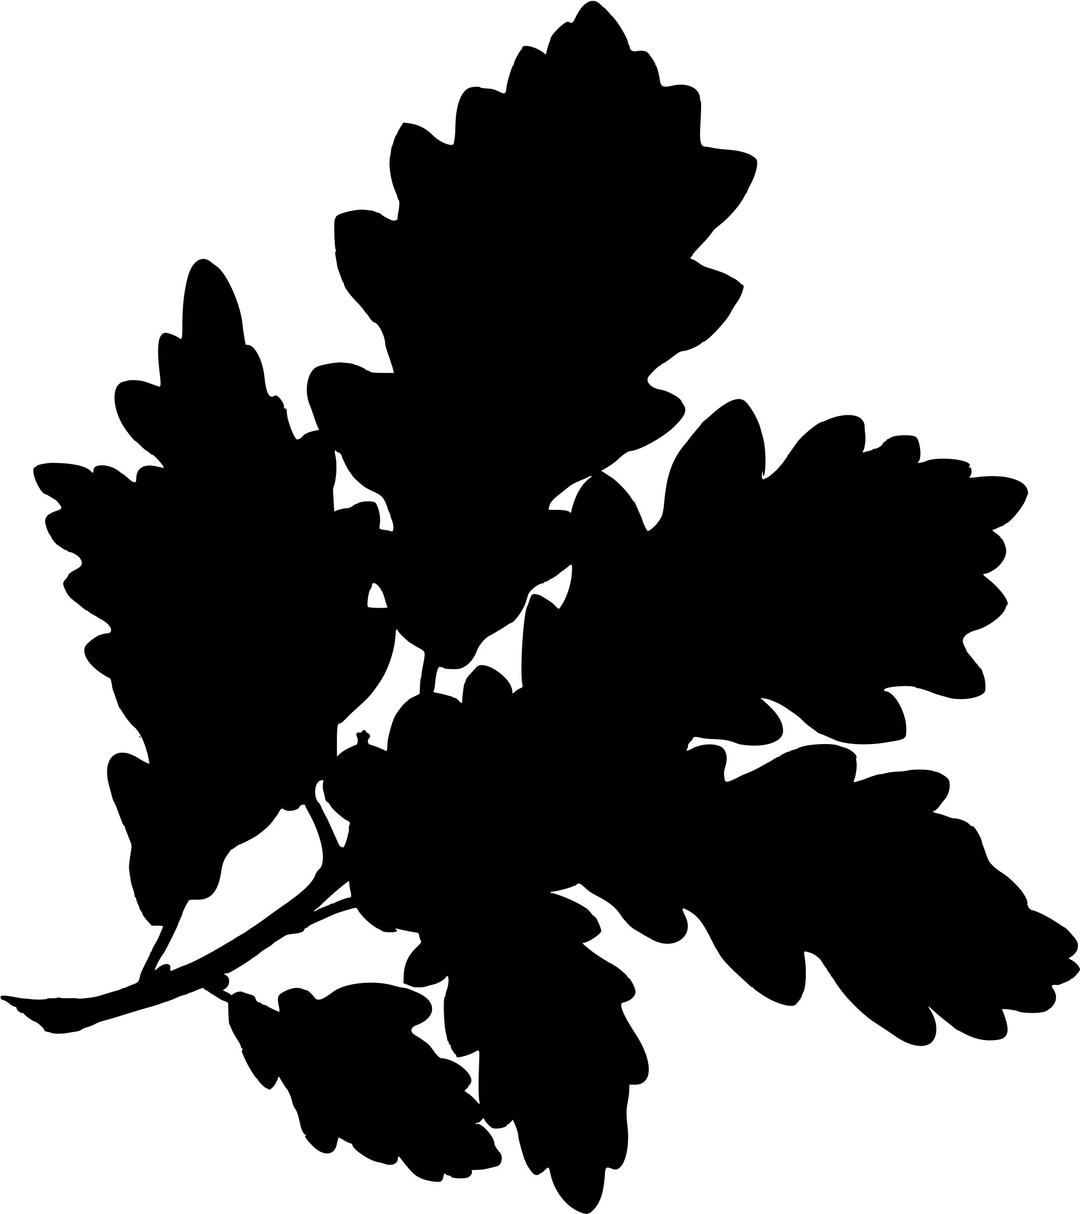 Sessile oak (silhouette) png transparent